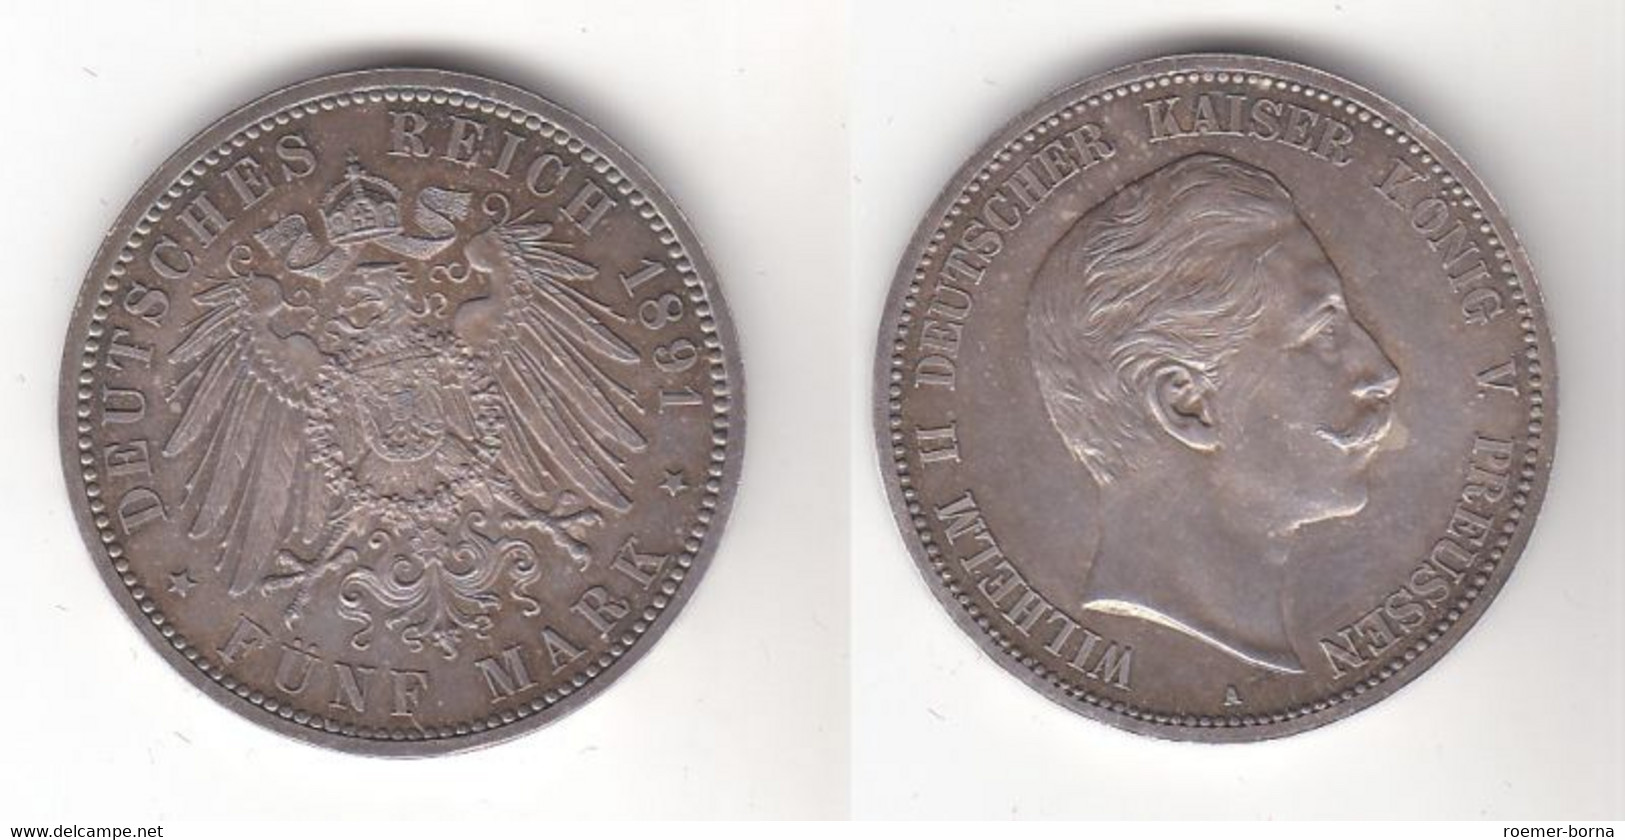 5 Mark Silber Münze Preussen Wilhelm II 1891 A Stgl. (119418) - 2, 3 & 5 Mark Argent